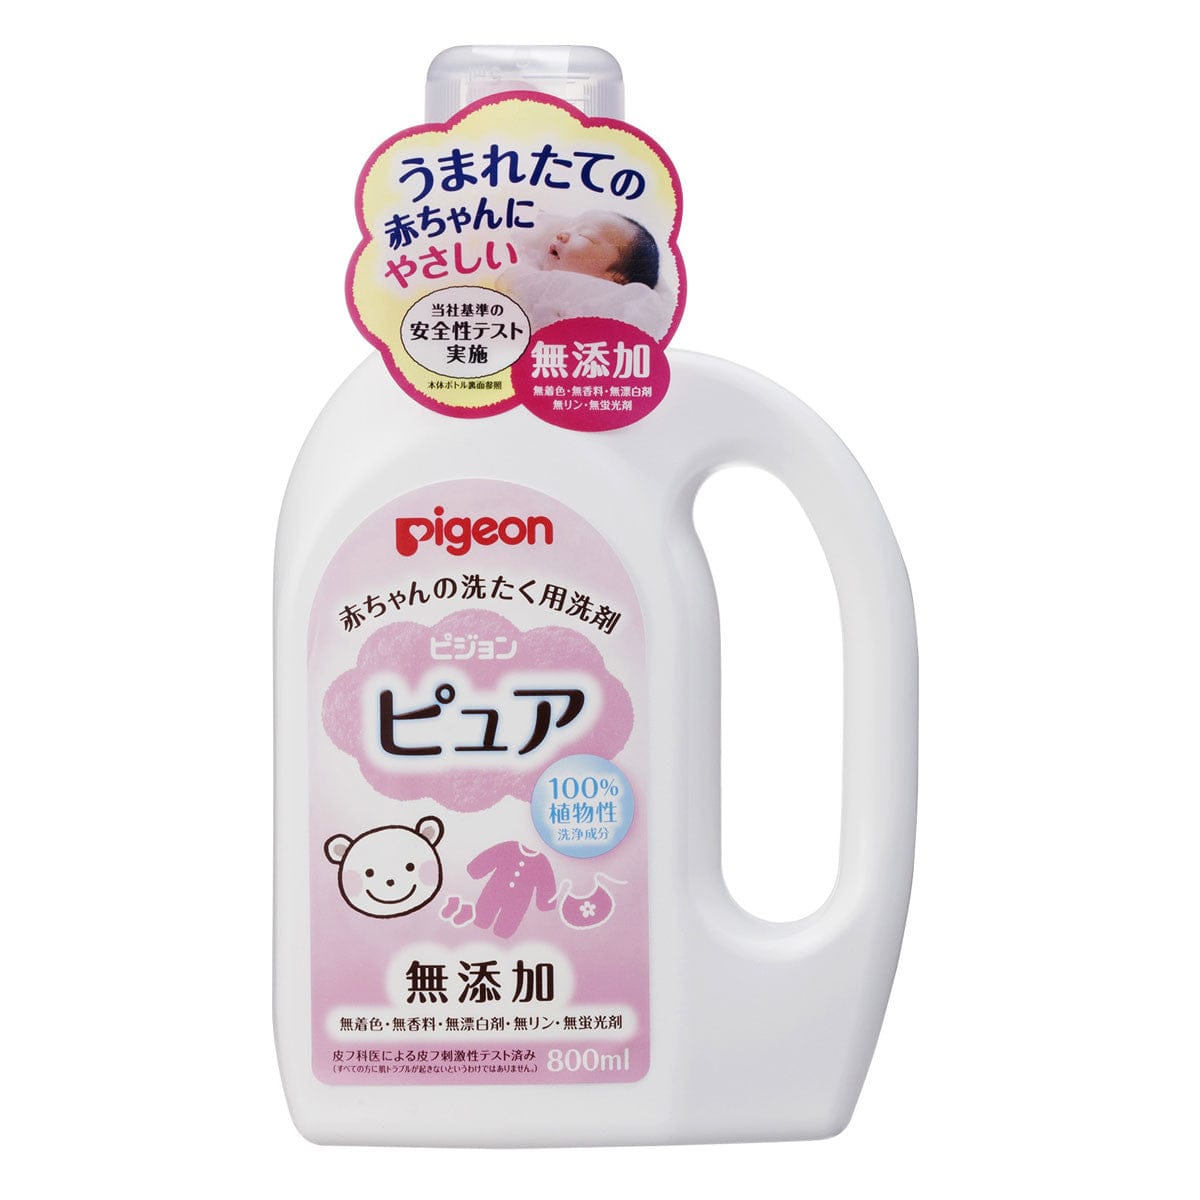 Pigeon - Pure Baby Laundry Detergent Bottle  800ml 4902508121316 Baby Detergents